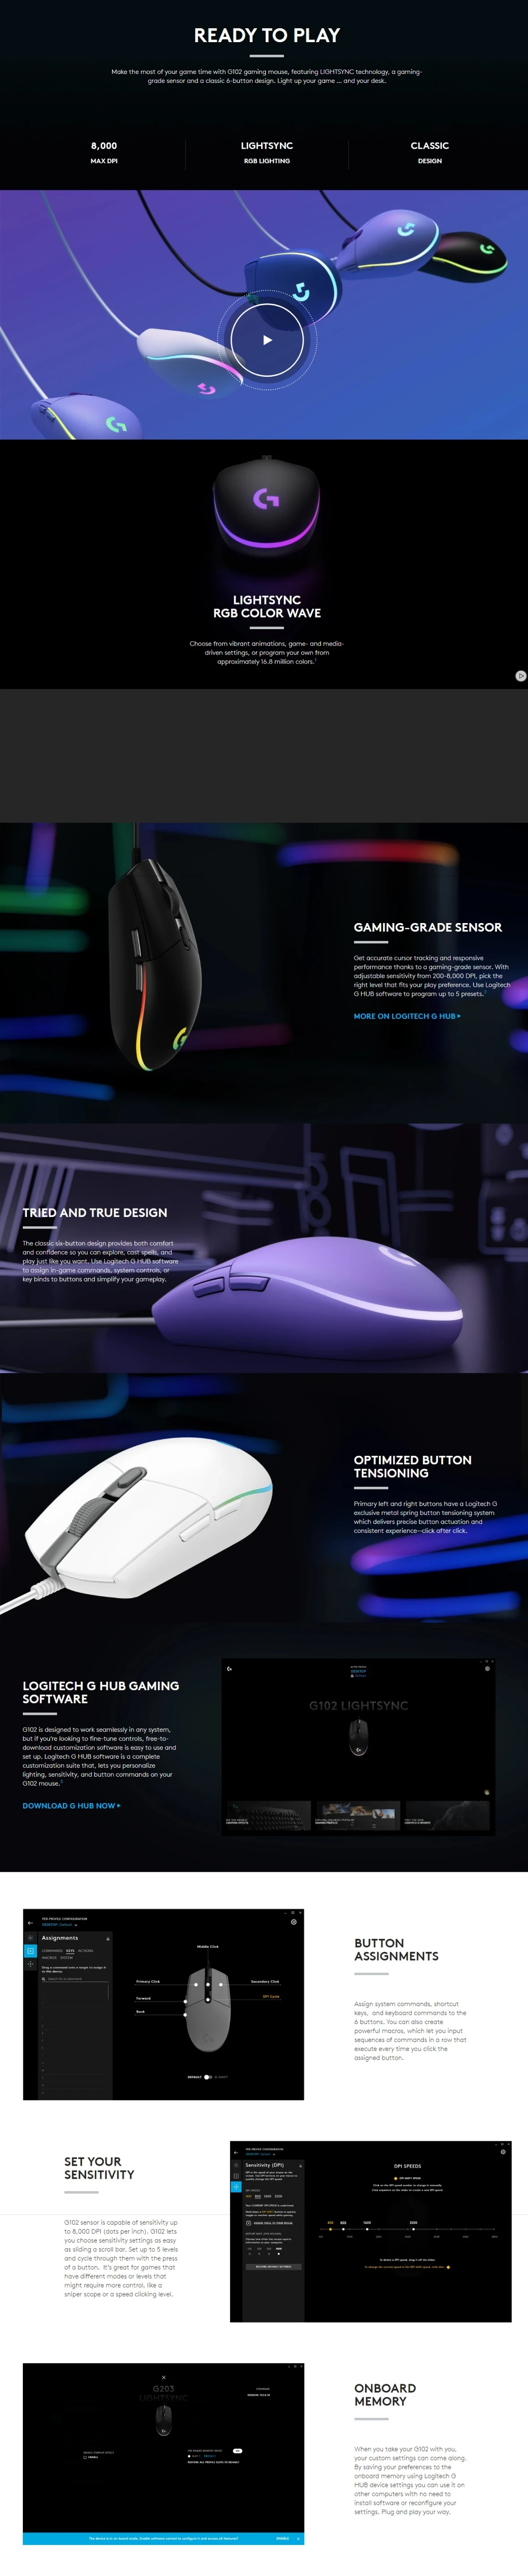 G102-white-logitech-gaming-mouse